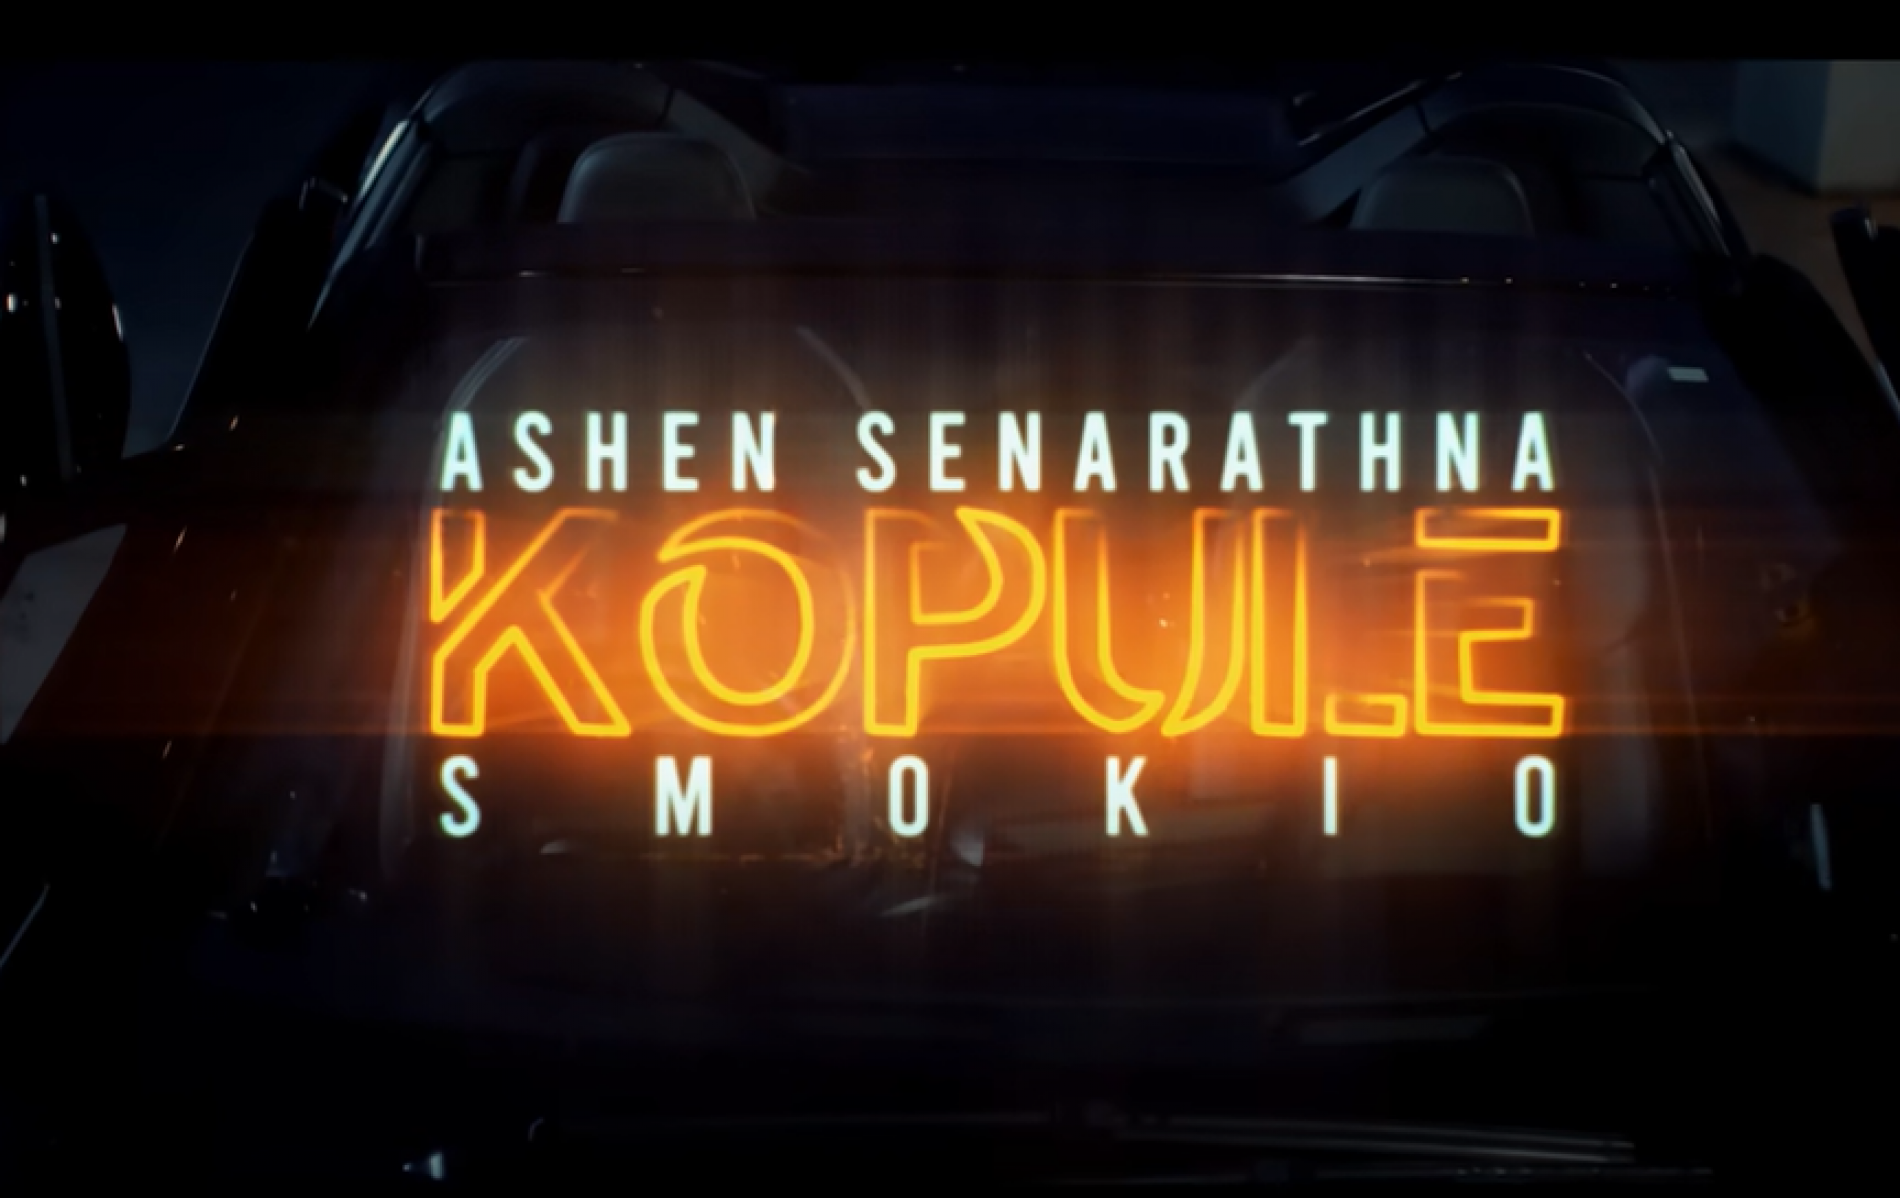 New Music : Kopule – Ashen Senarathna ft Smokio – Official Music Video